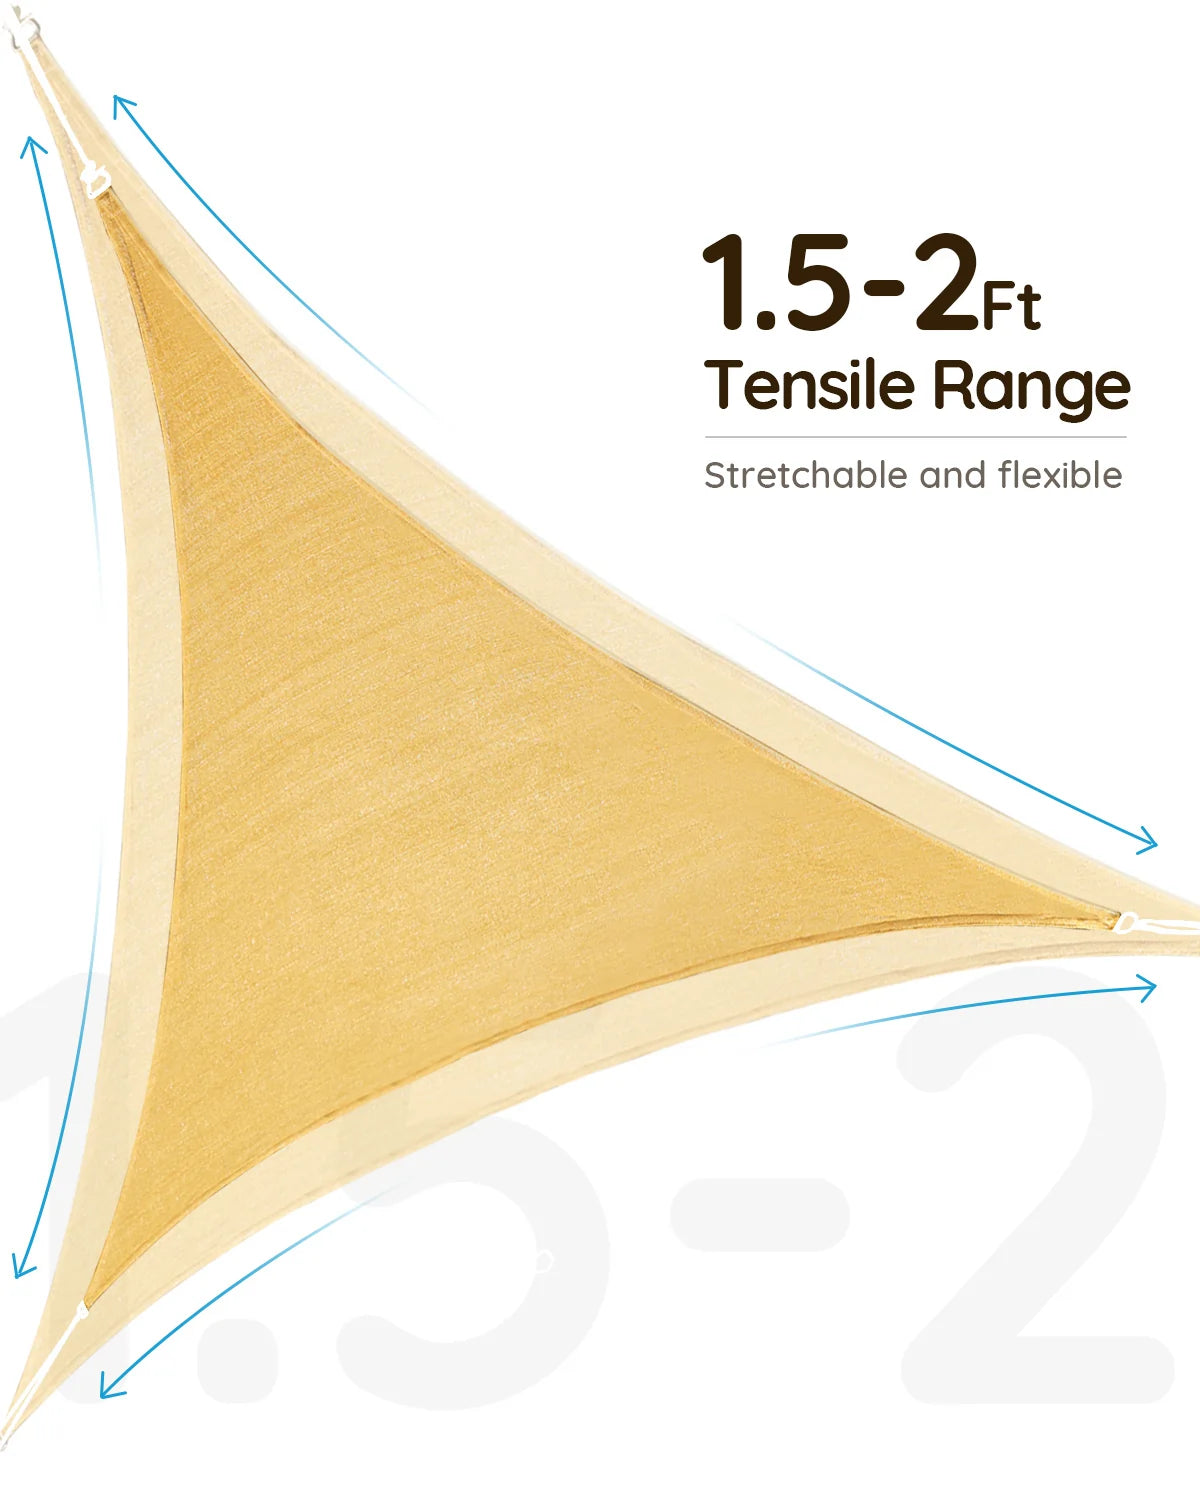 Triangle shade sail size#size_12X12X12 FT